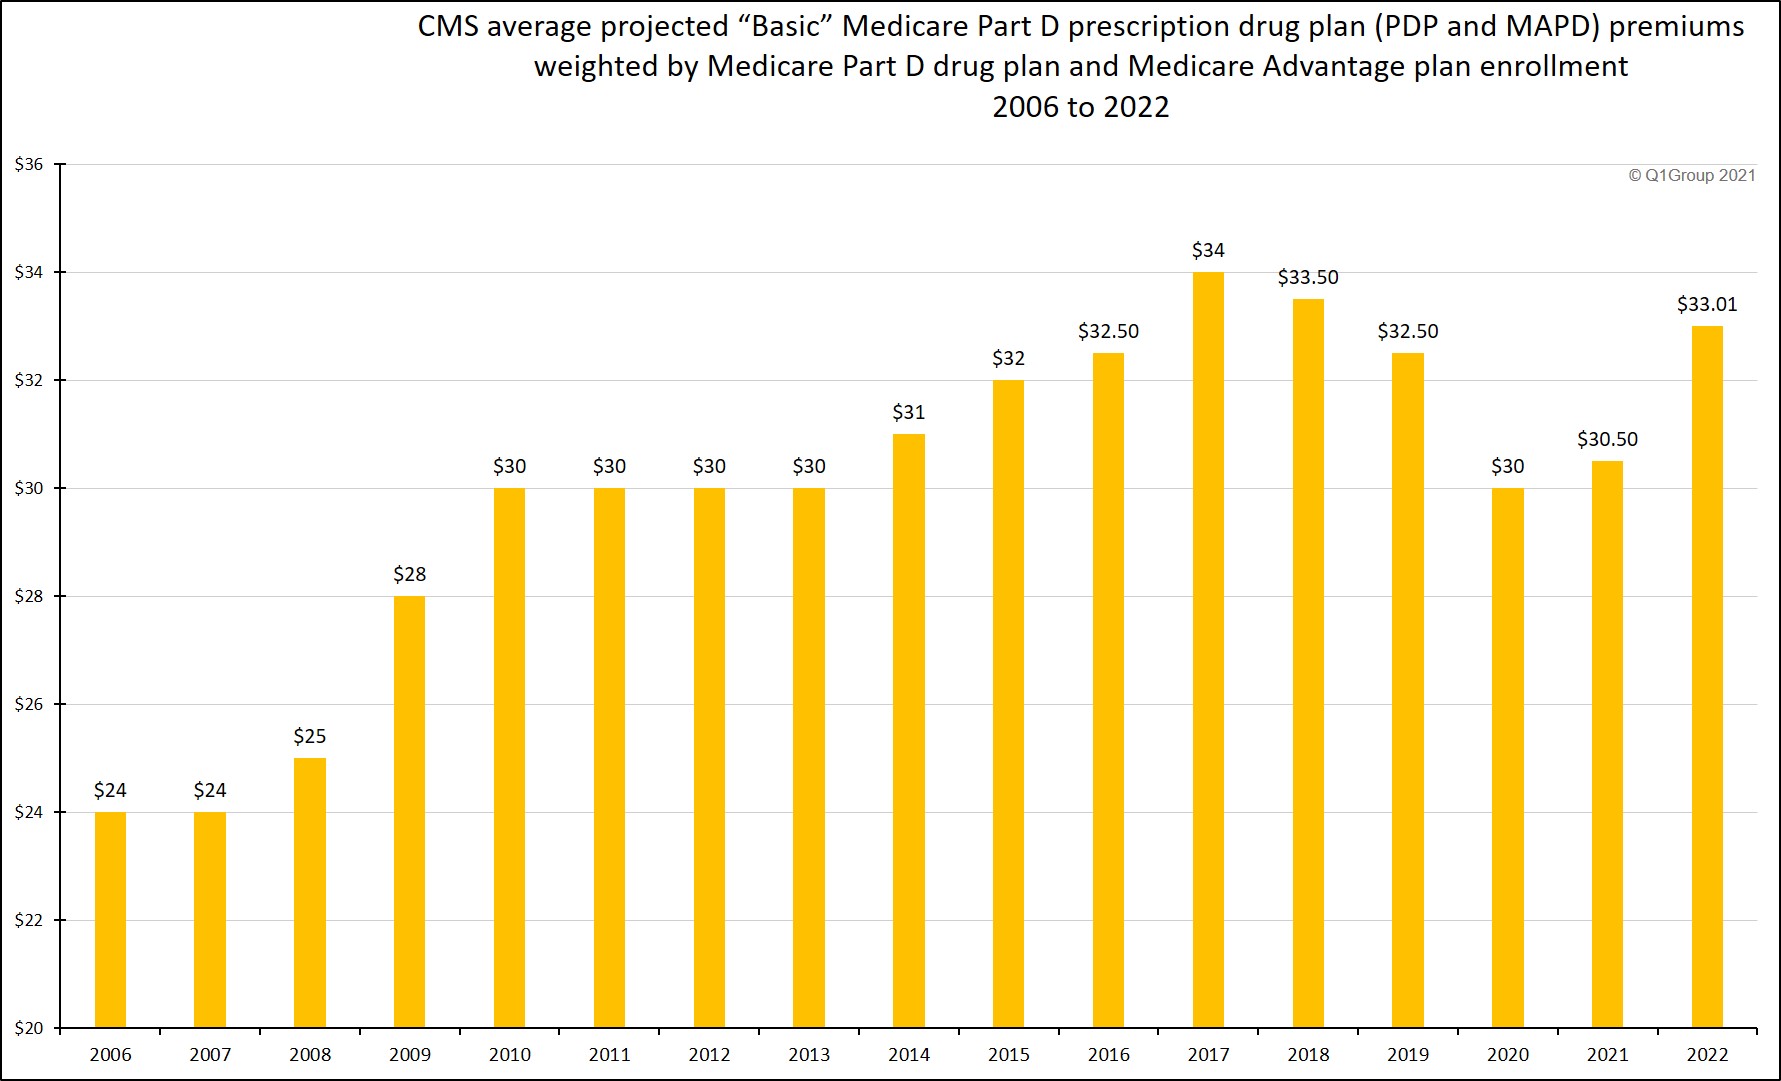 Changes in project Medicare Part D premiums